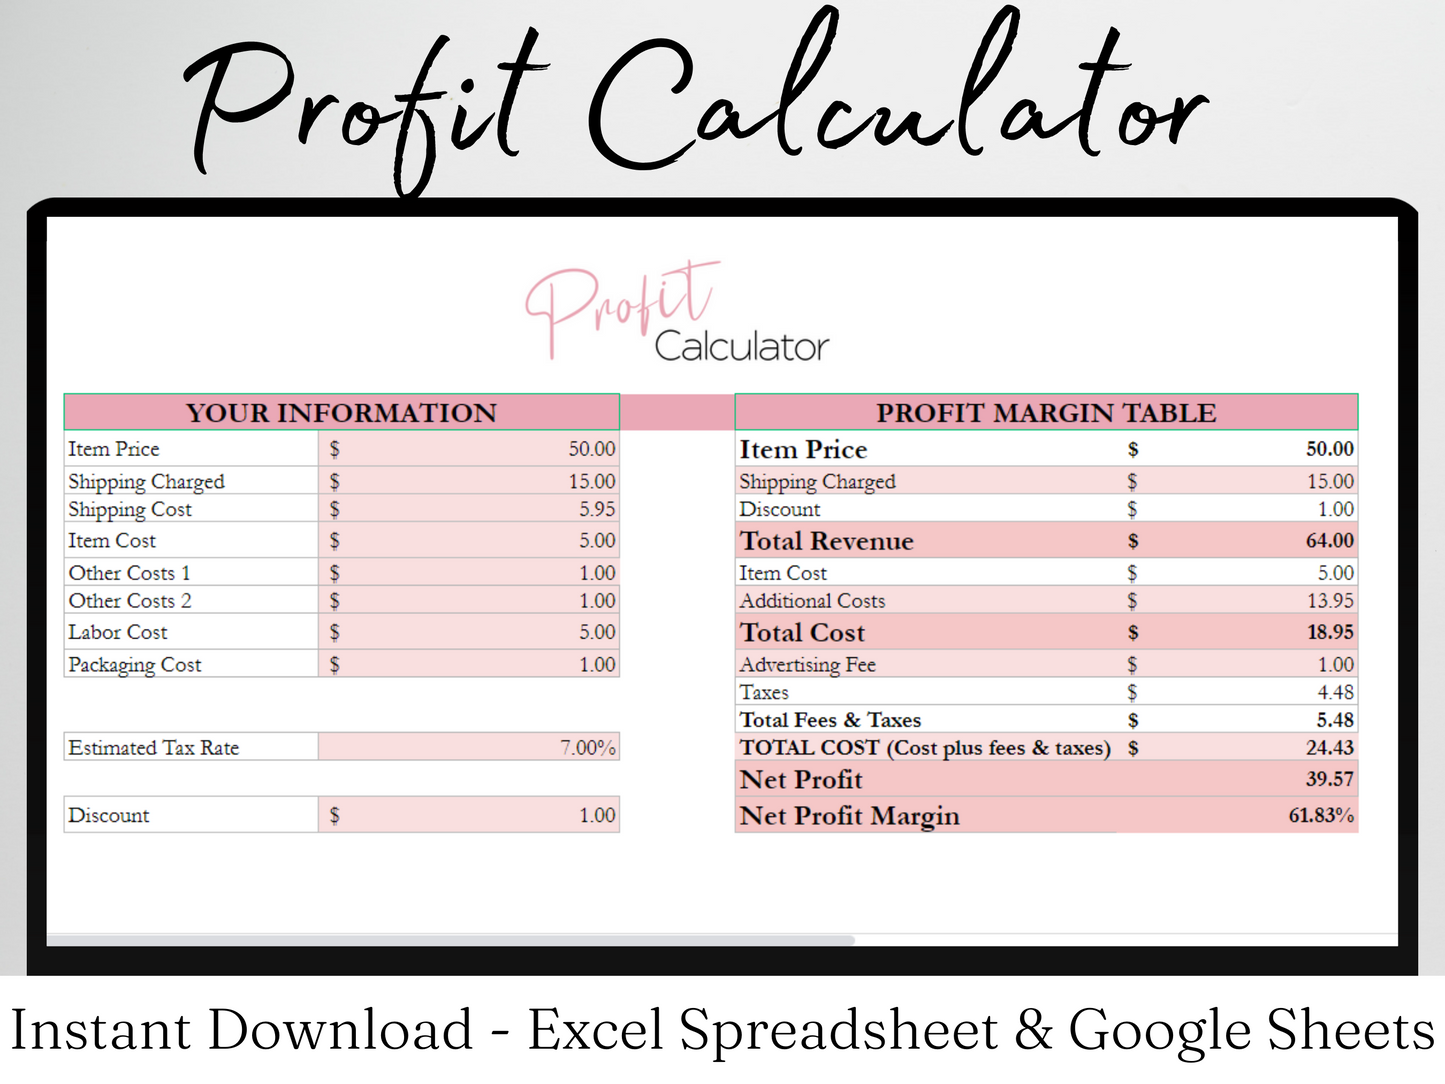 Profit Calculator Template Google Sheets Excel Spreadsheet